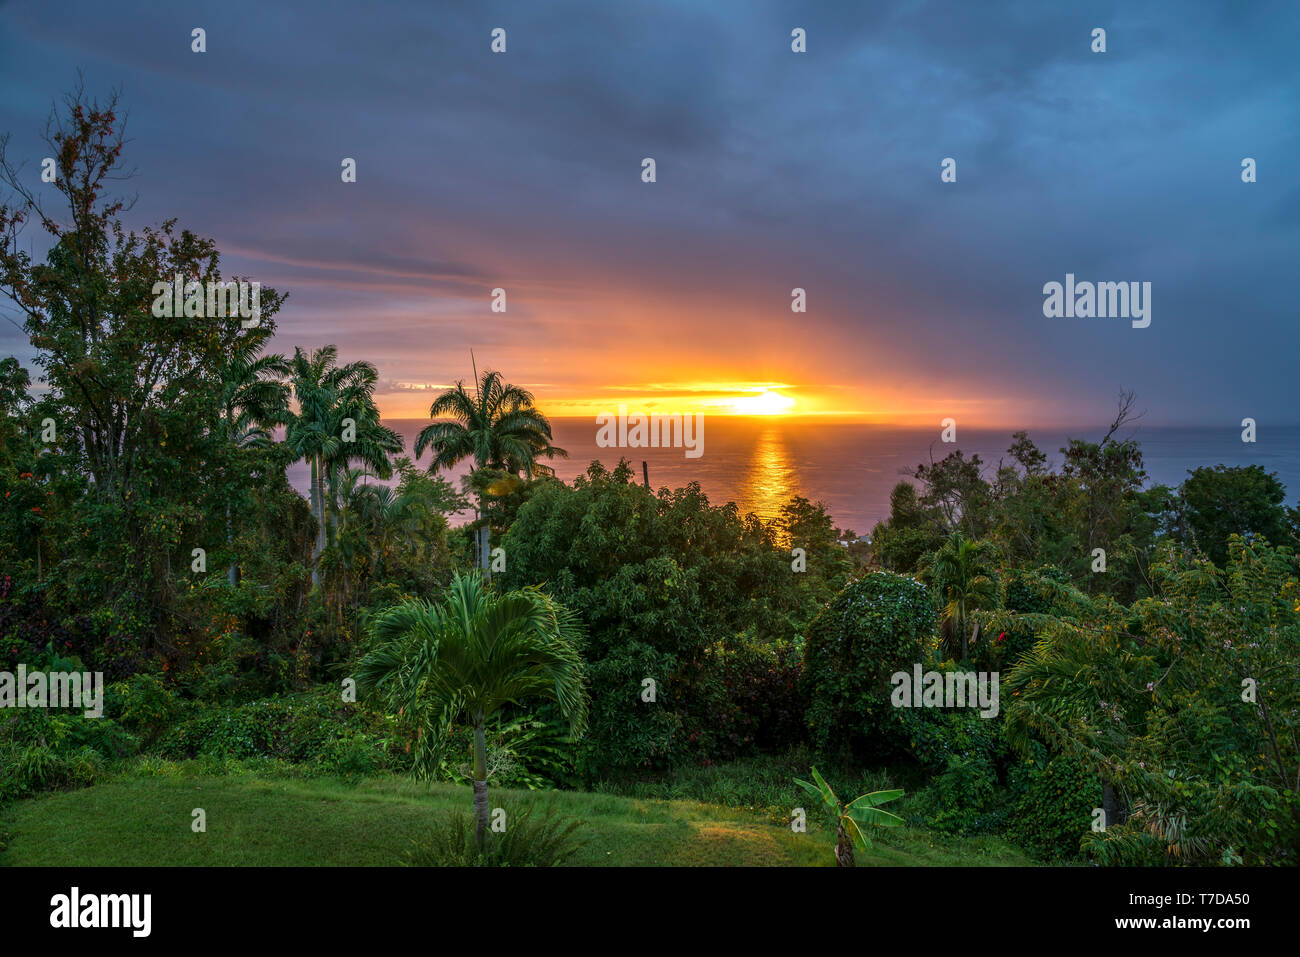 Sonnenuntergang an der Küste von Dominica, Karibik, Mittelamerika  |  sunset at the coast of Dominica, Caribbean, Central America Stock Photo